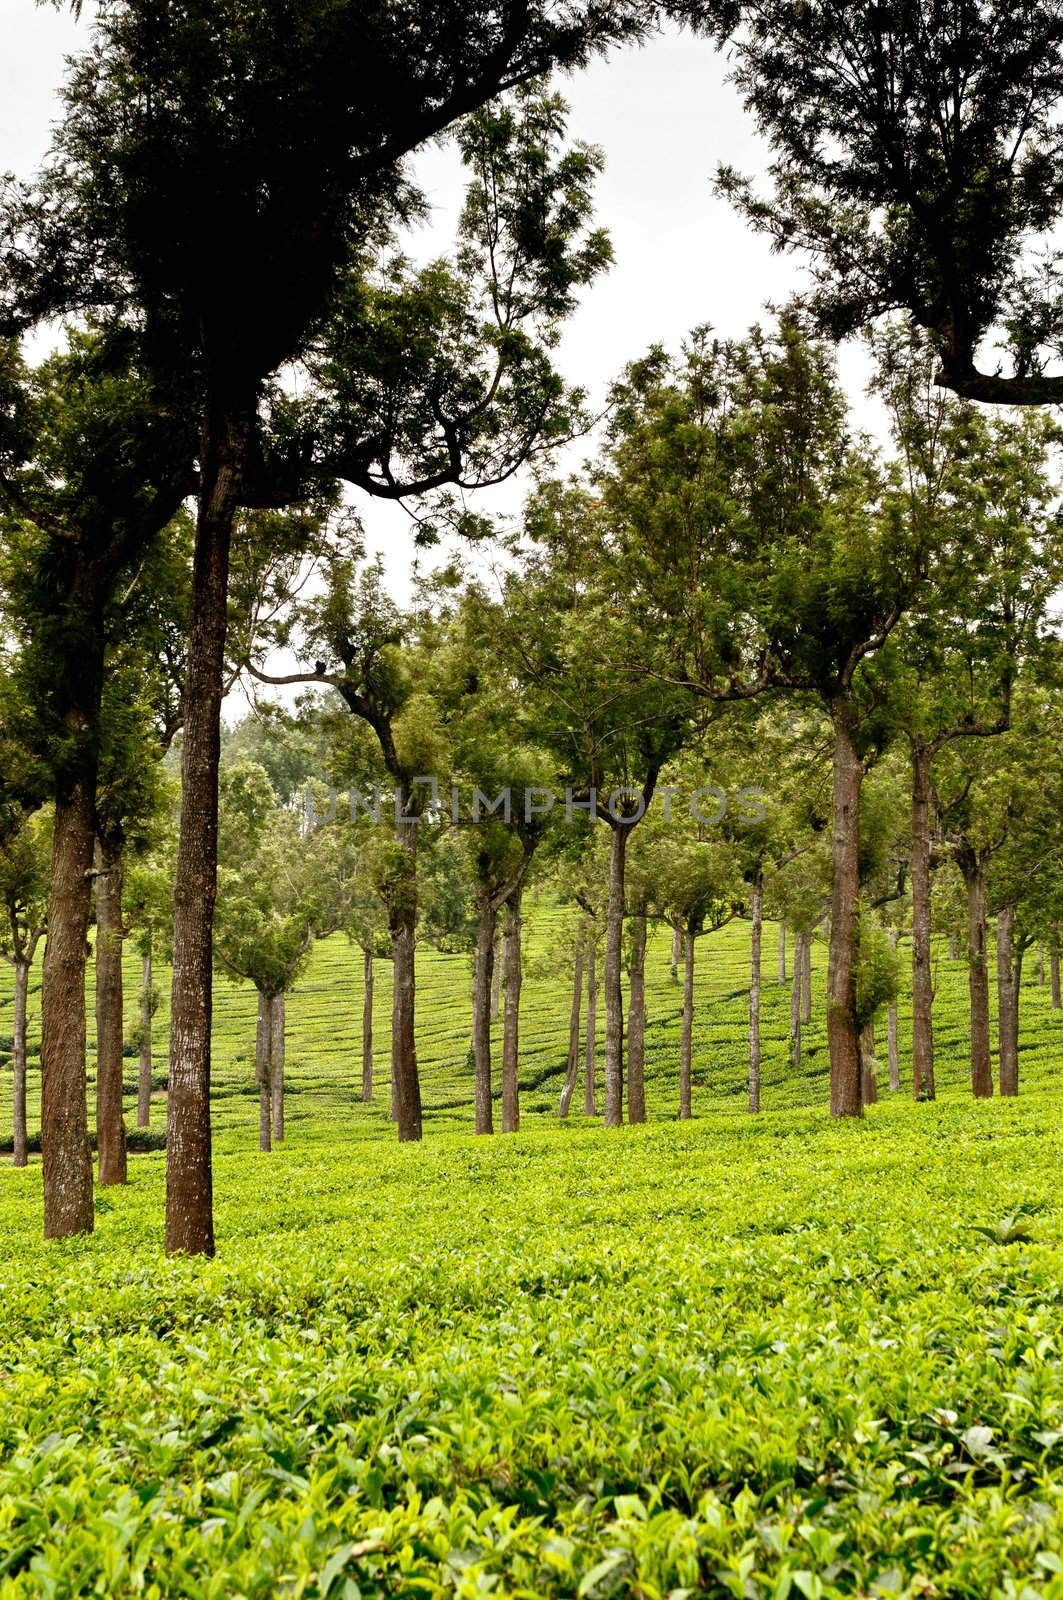 Tea Plantation by pazham